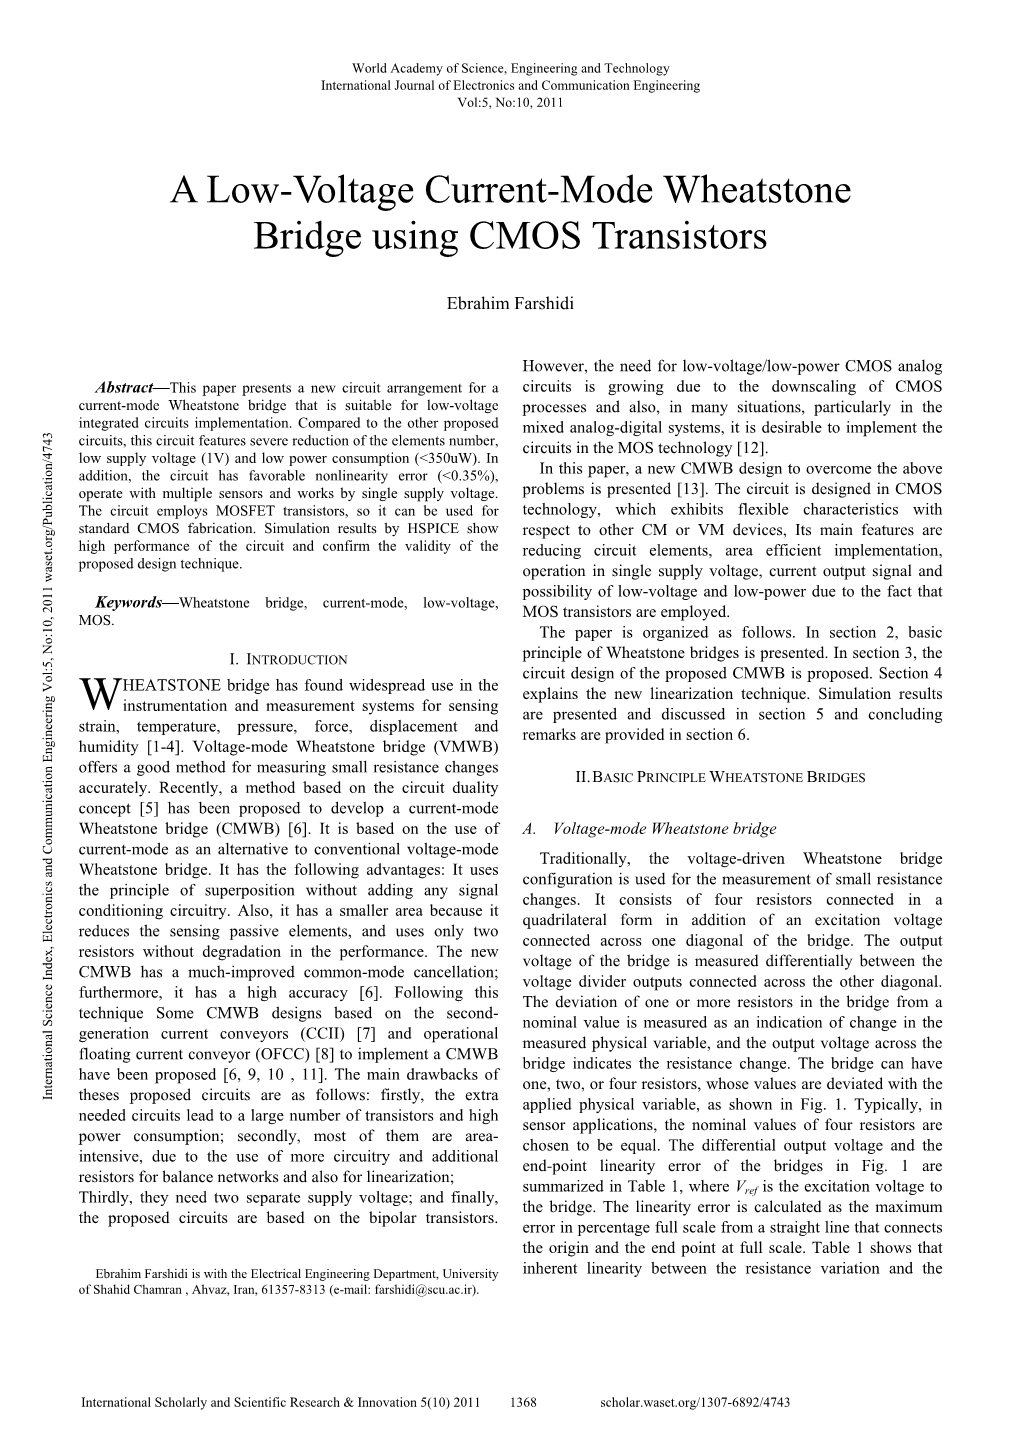 A Low-Voltage Current-Mode Wheatstone Bridge Using CMOS Transistors